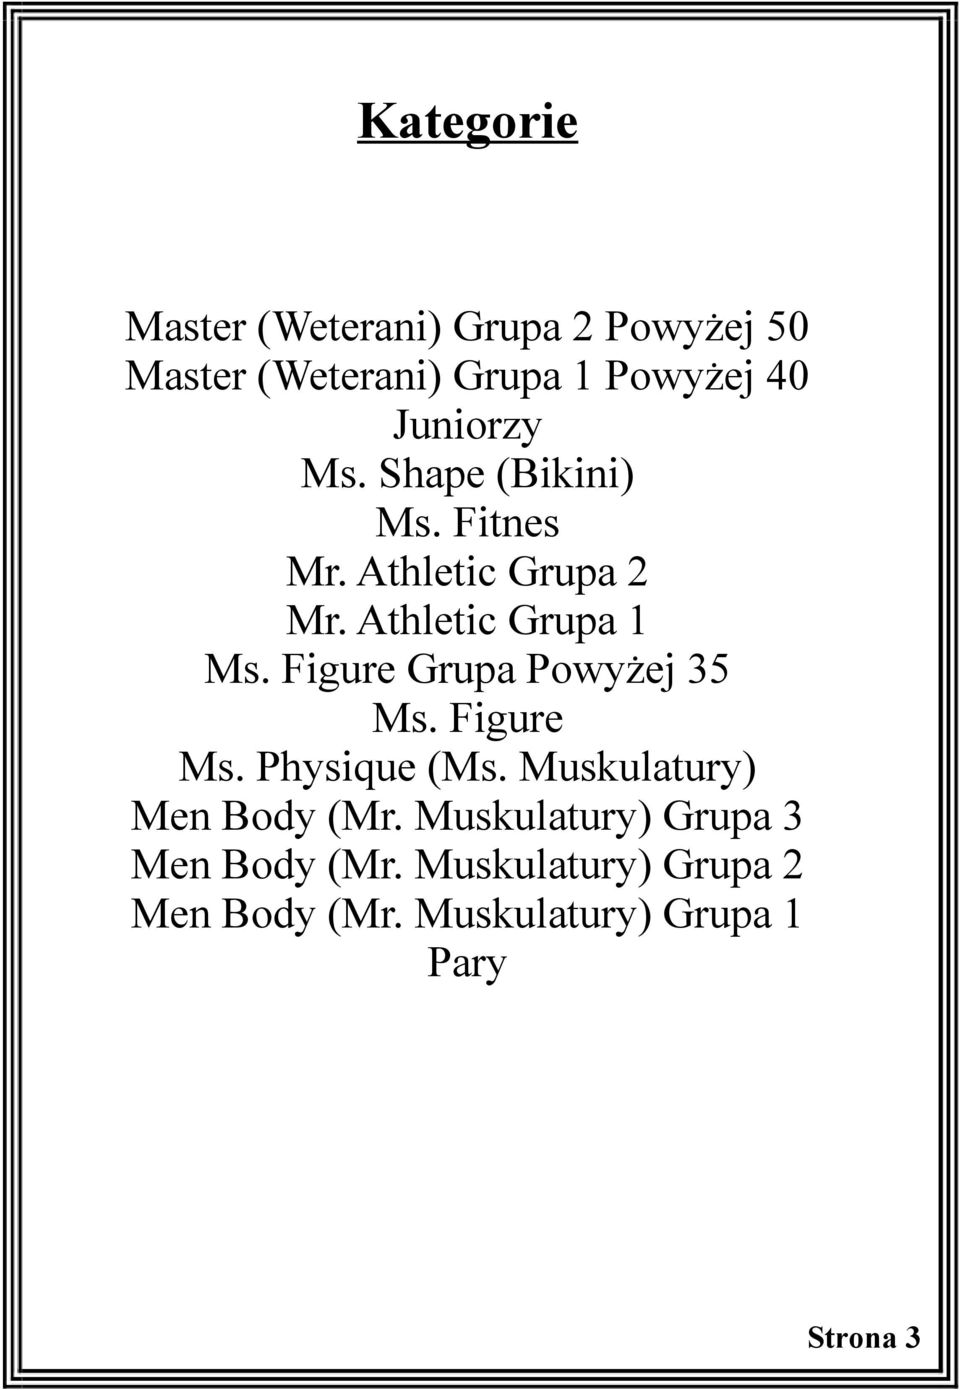 Figure Grupa Powyżej 35 Ms. Figure Ms. Physique (Ms. Muskulatury) Men Body (Mr.